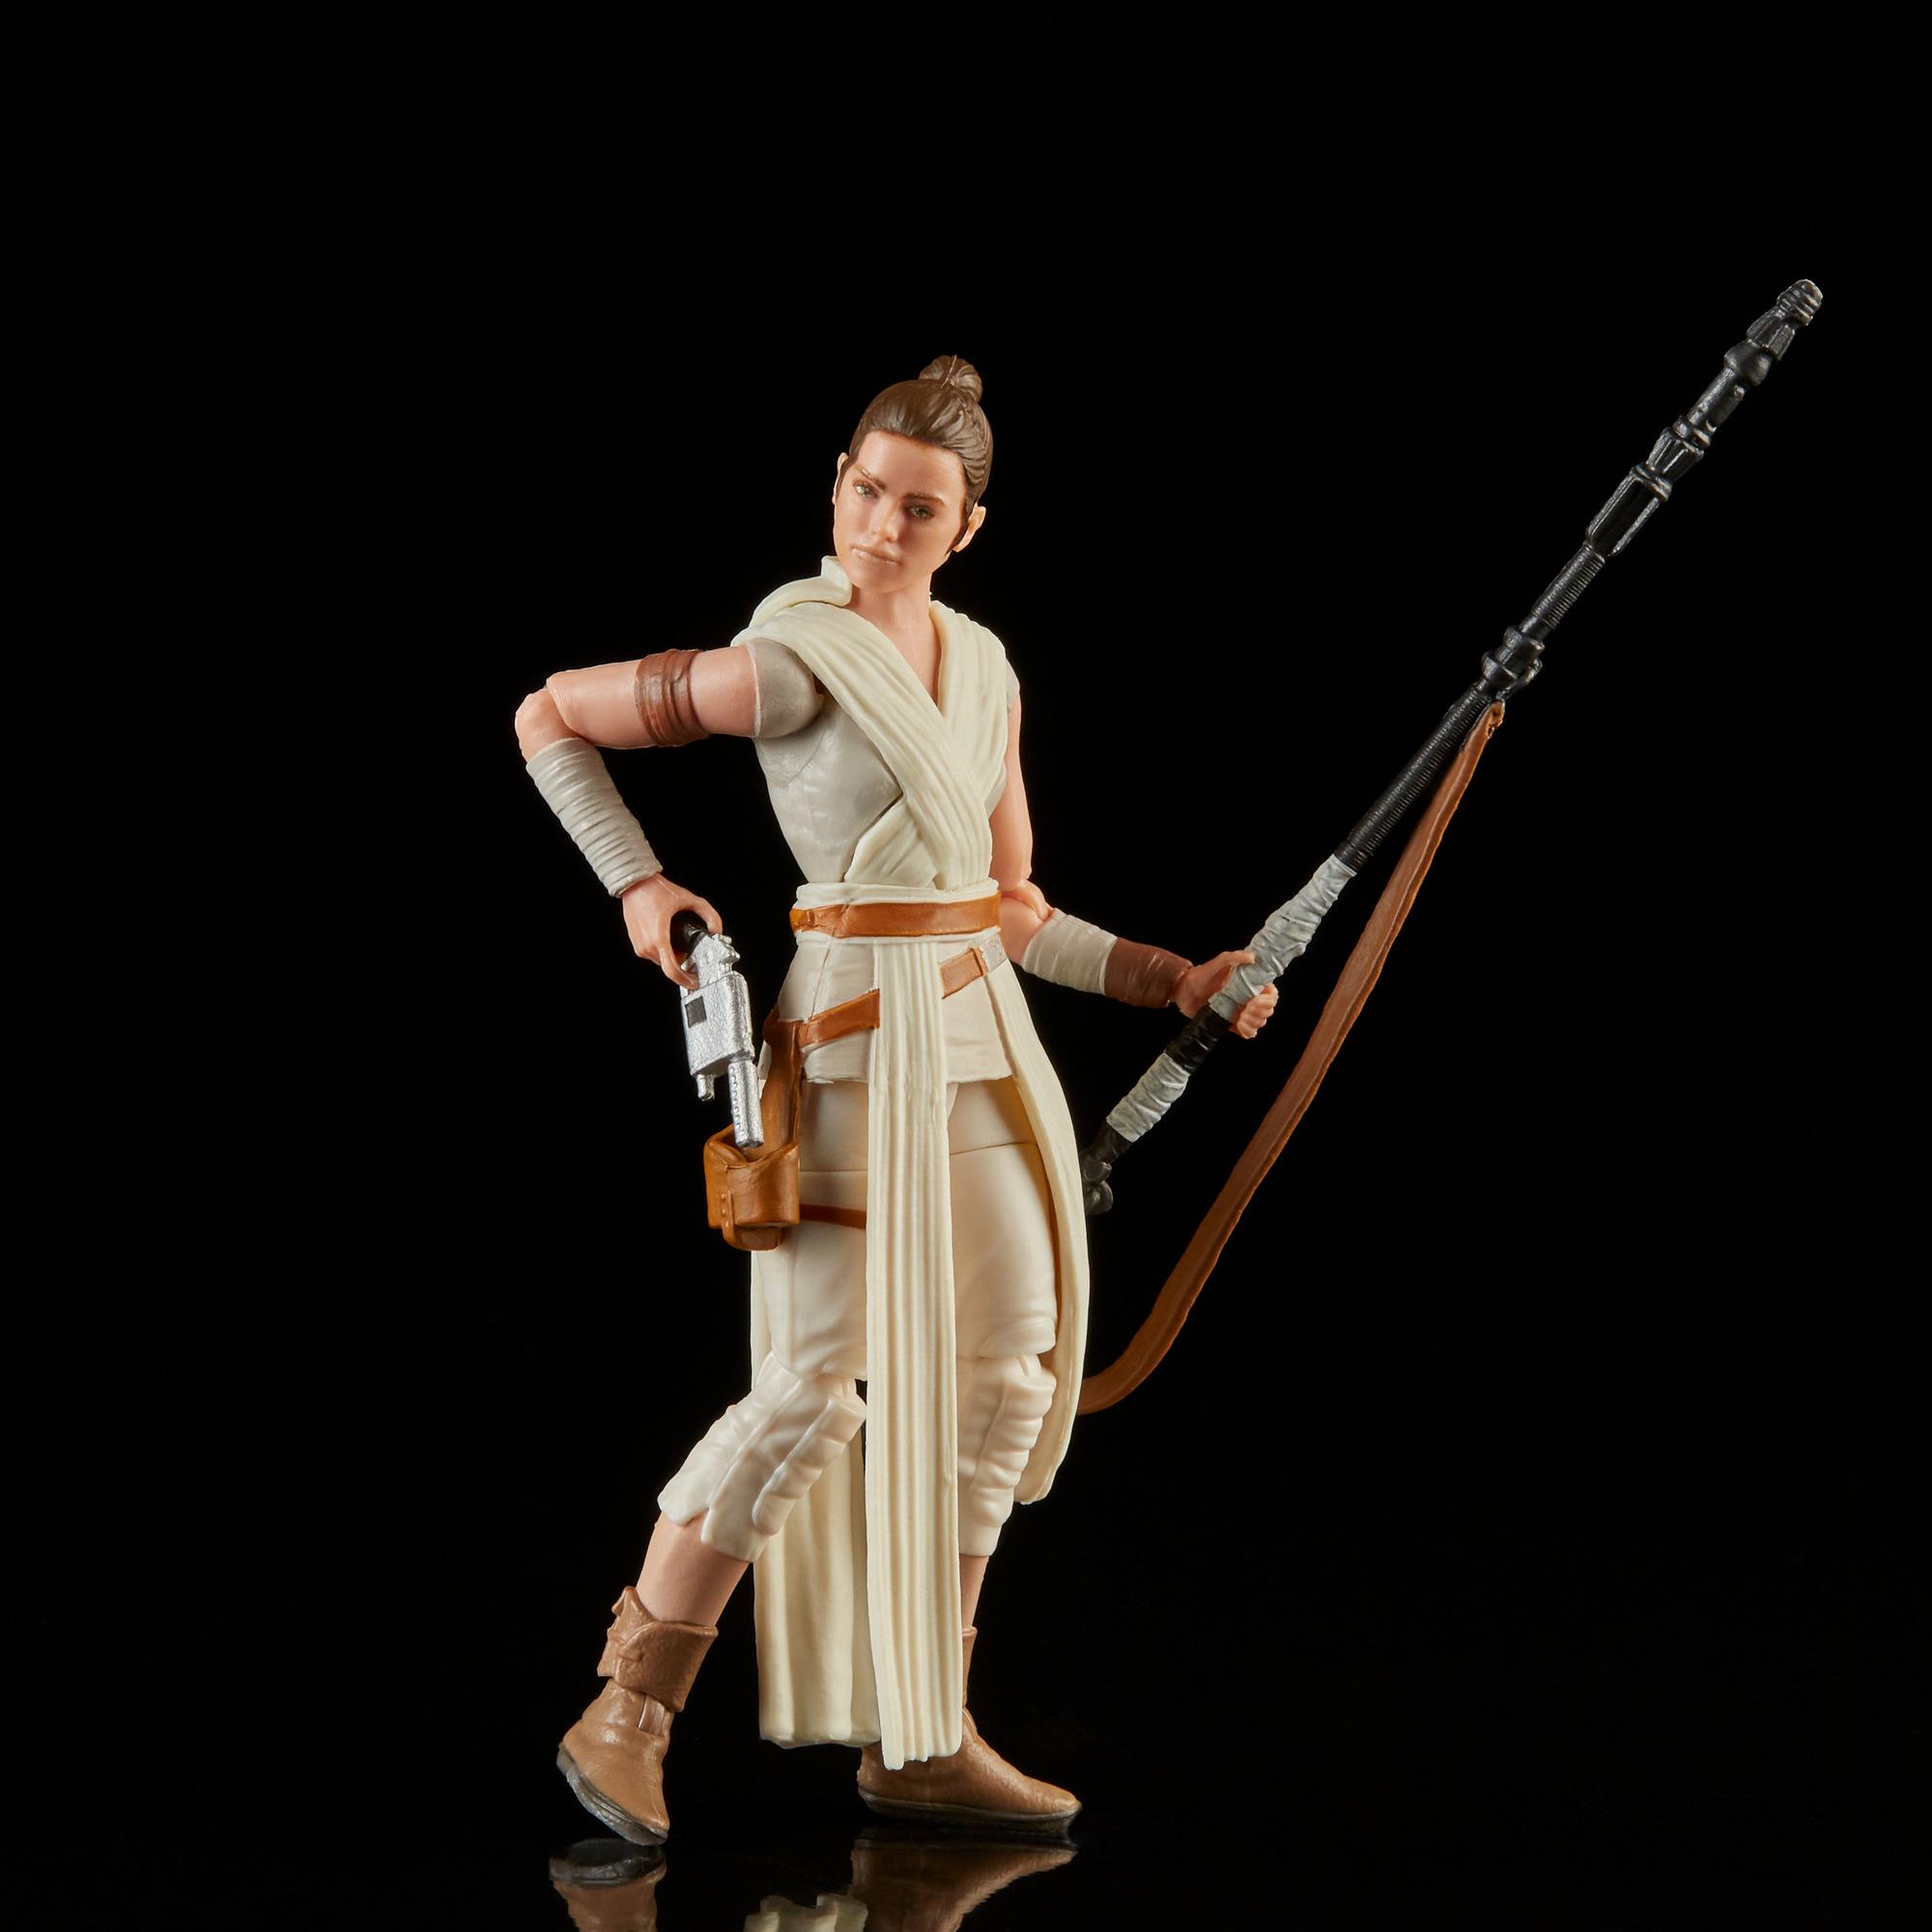 Star Wars Tusken Raider 3.75" Action Figure Black Series 2016 Hasbro Exclusive